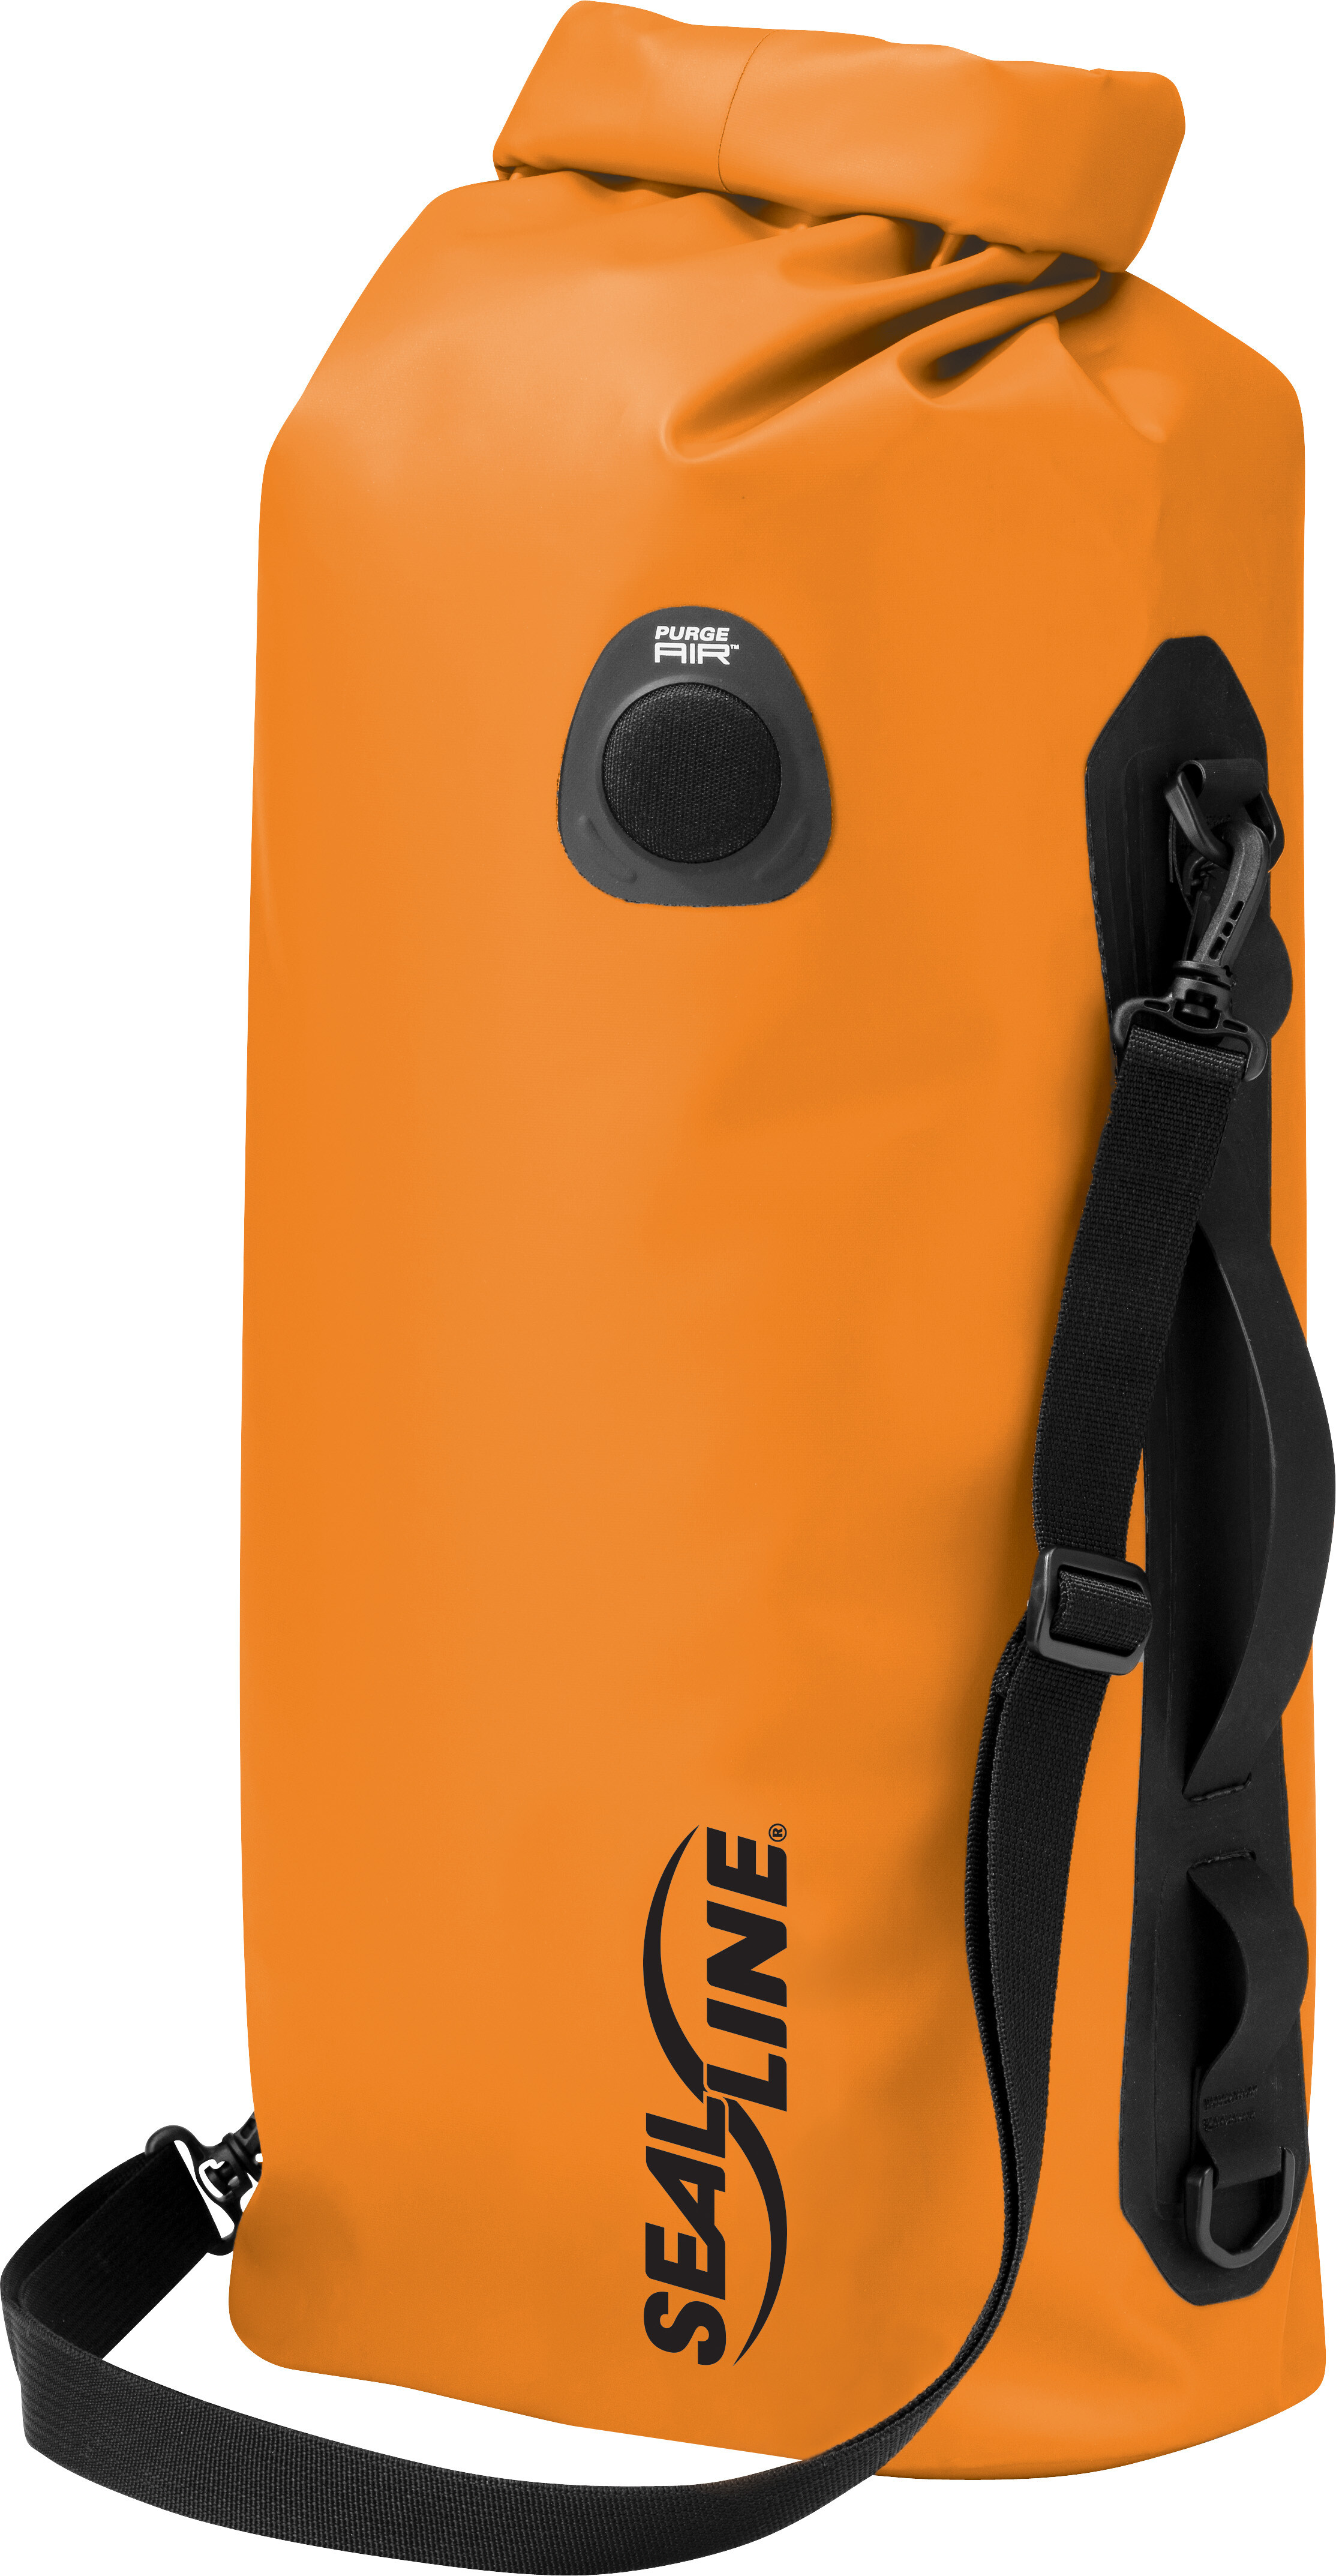 SealLine Discovery Deck Dry Bag 20l orange | Addnature.co.uk